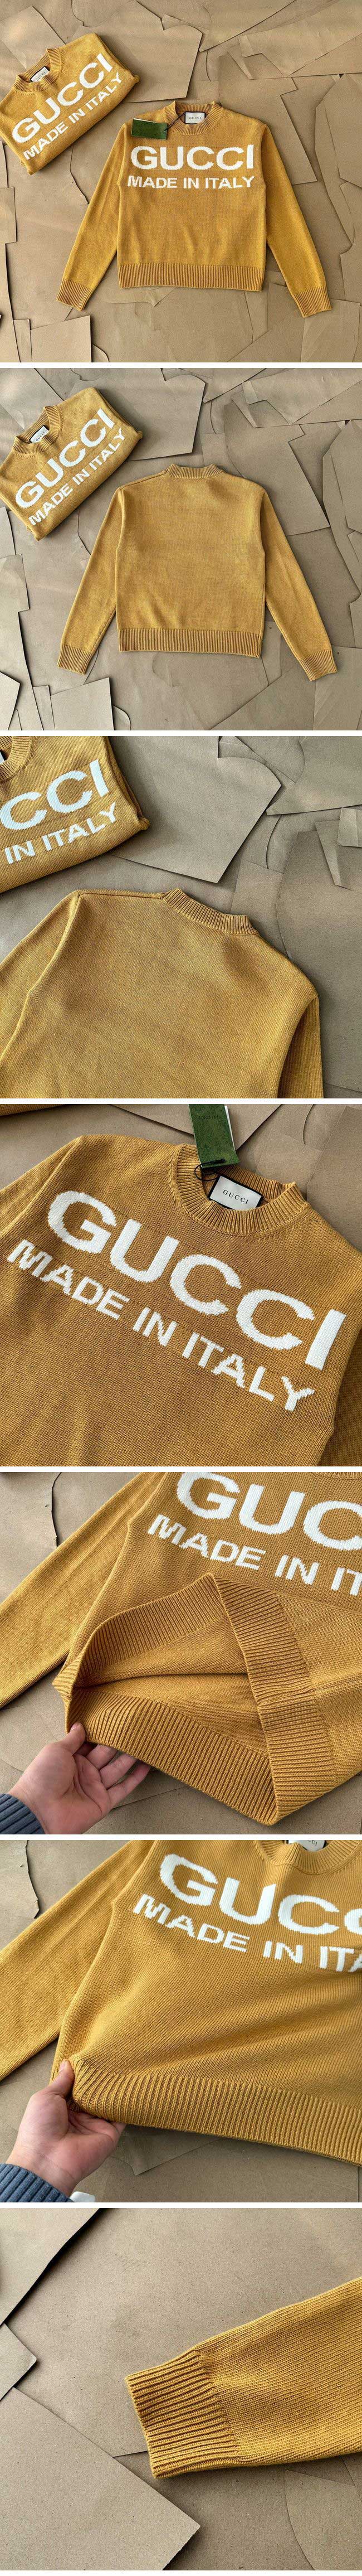 Gucci Made In Italy Logo Sweater グッチ メイドイン イタリ ロゴ セーター